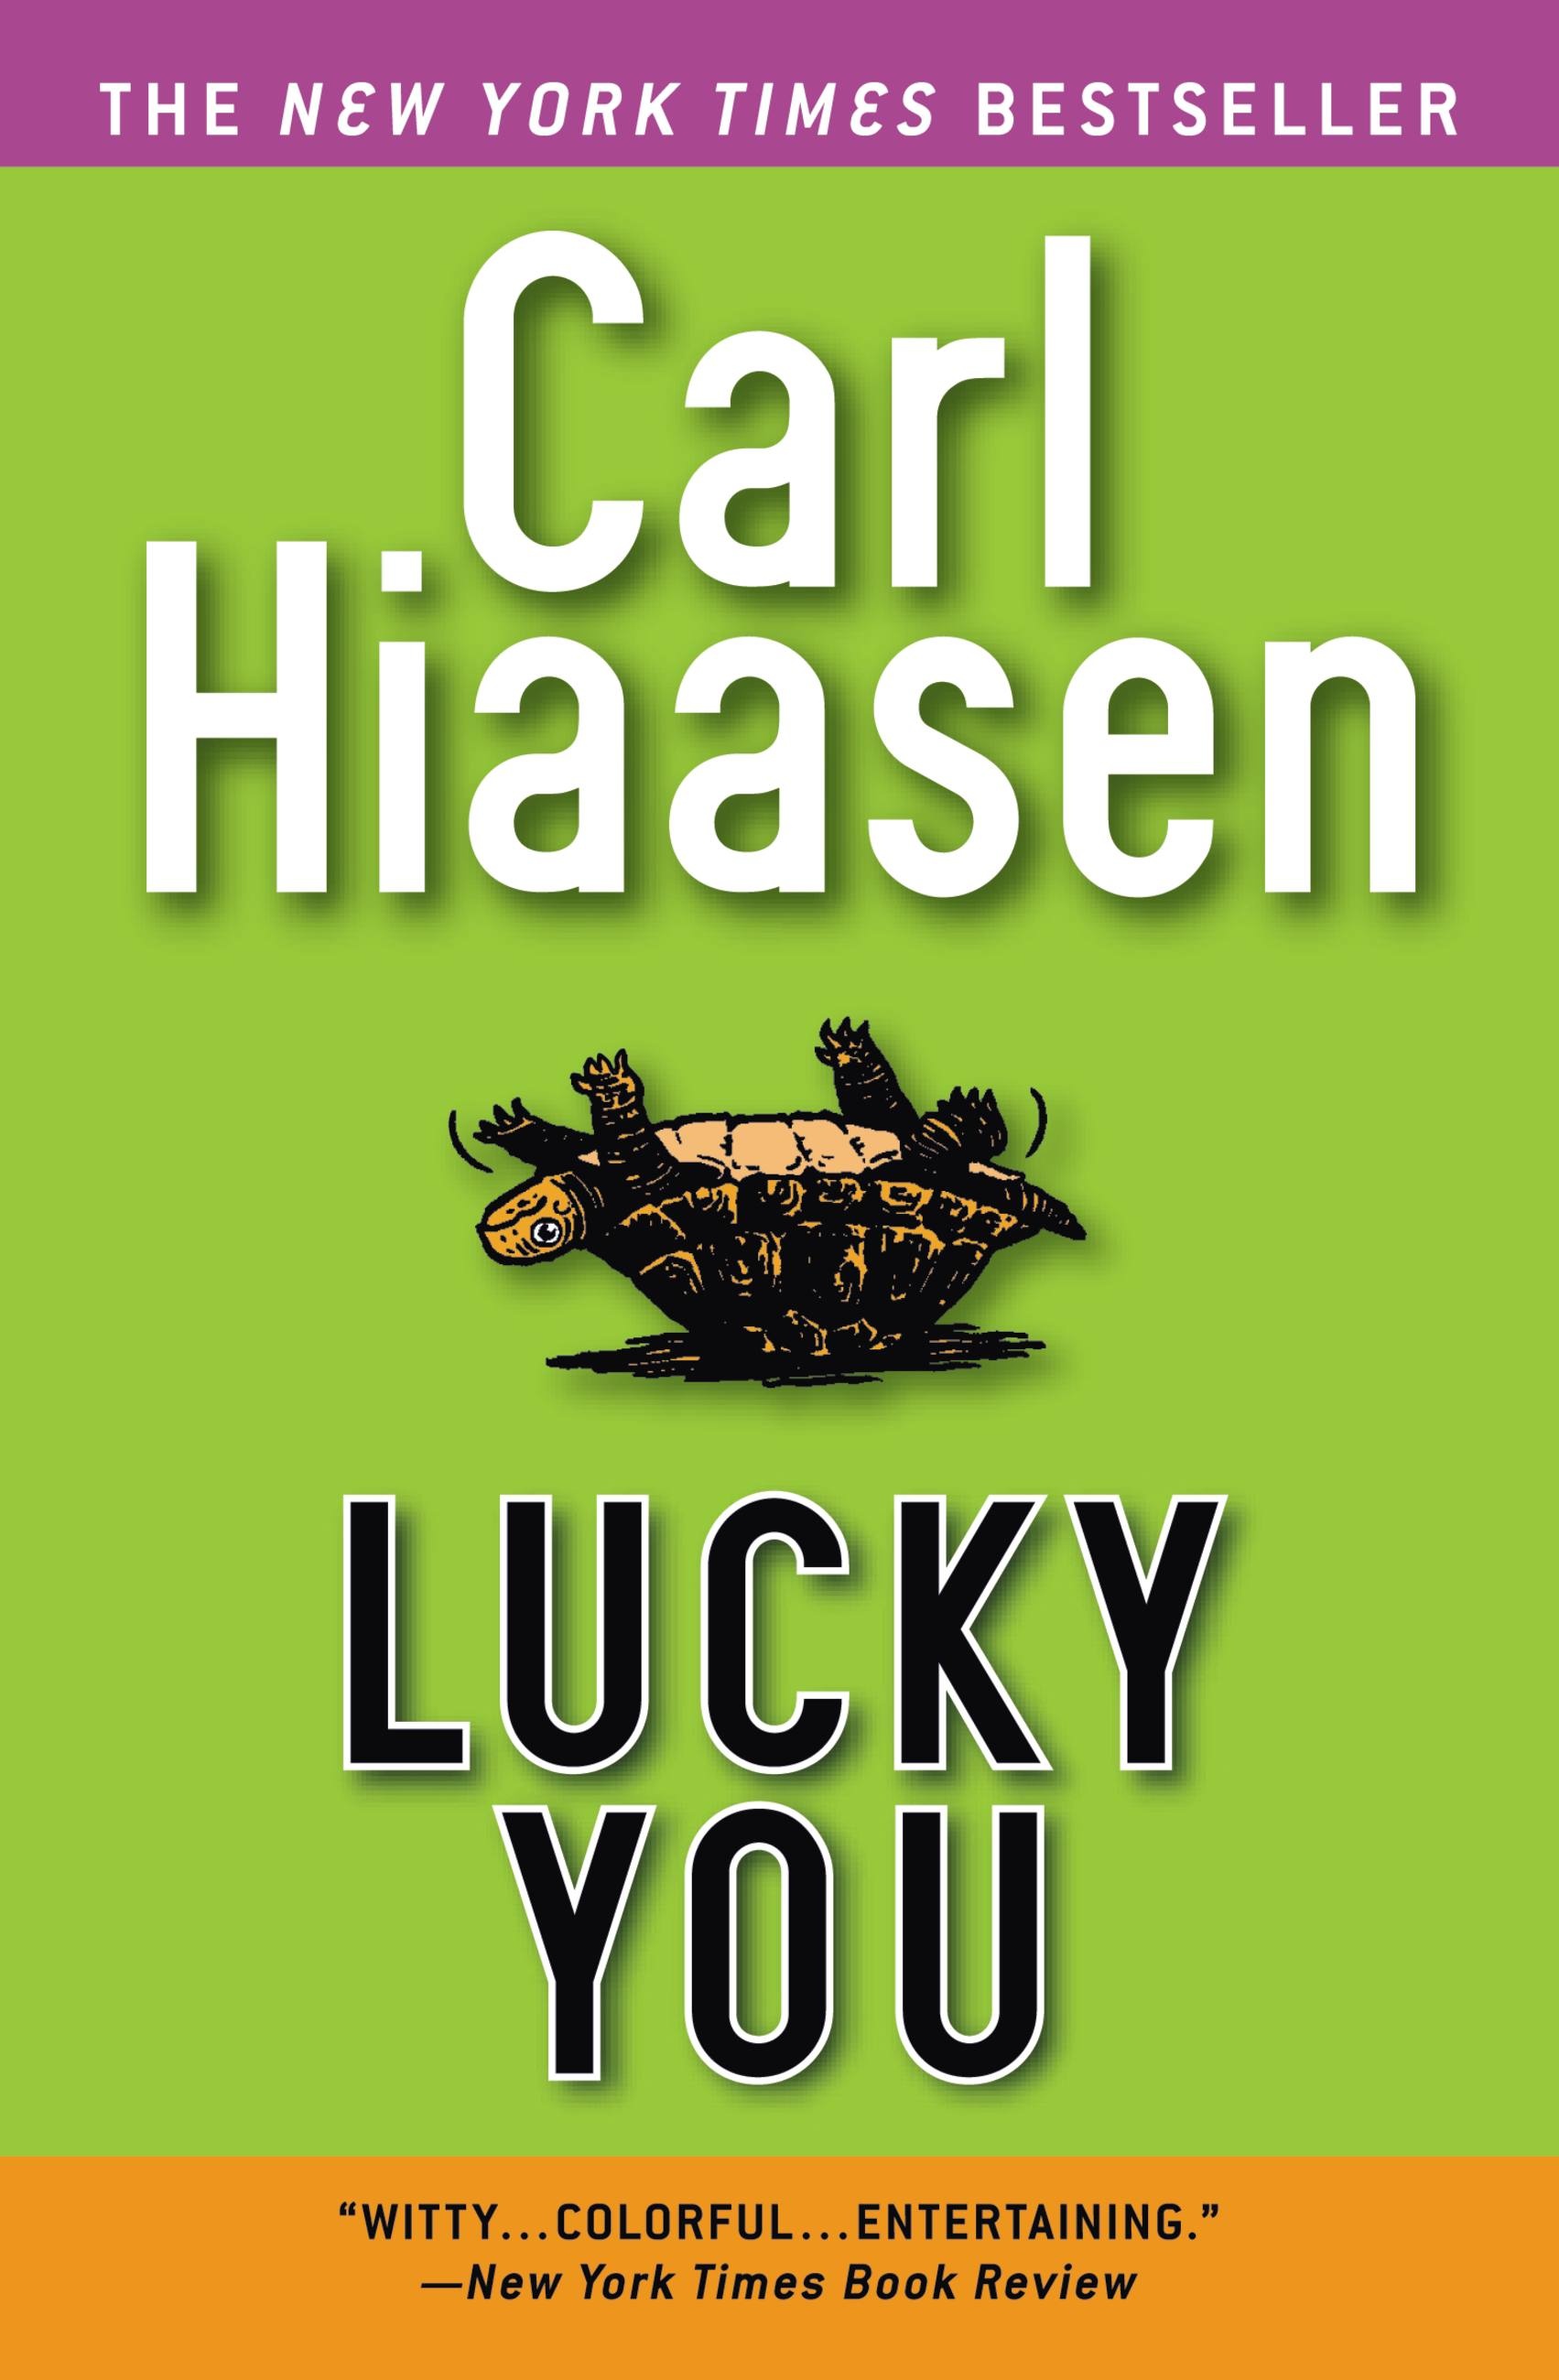 carl hiaasen book covers